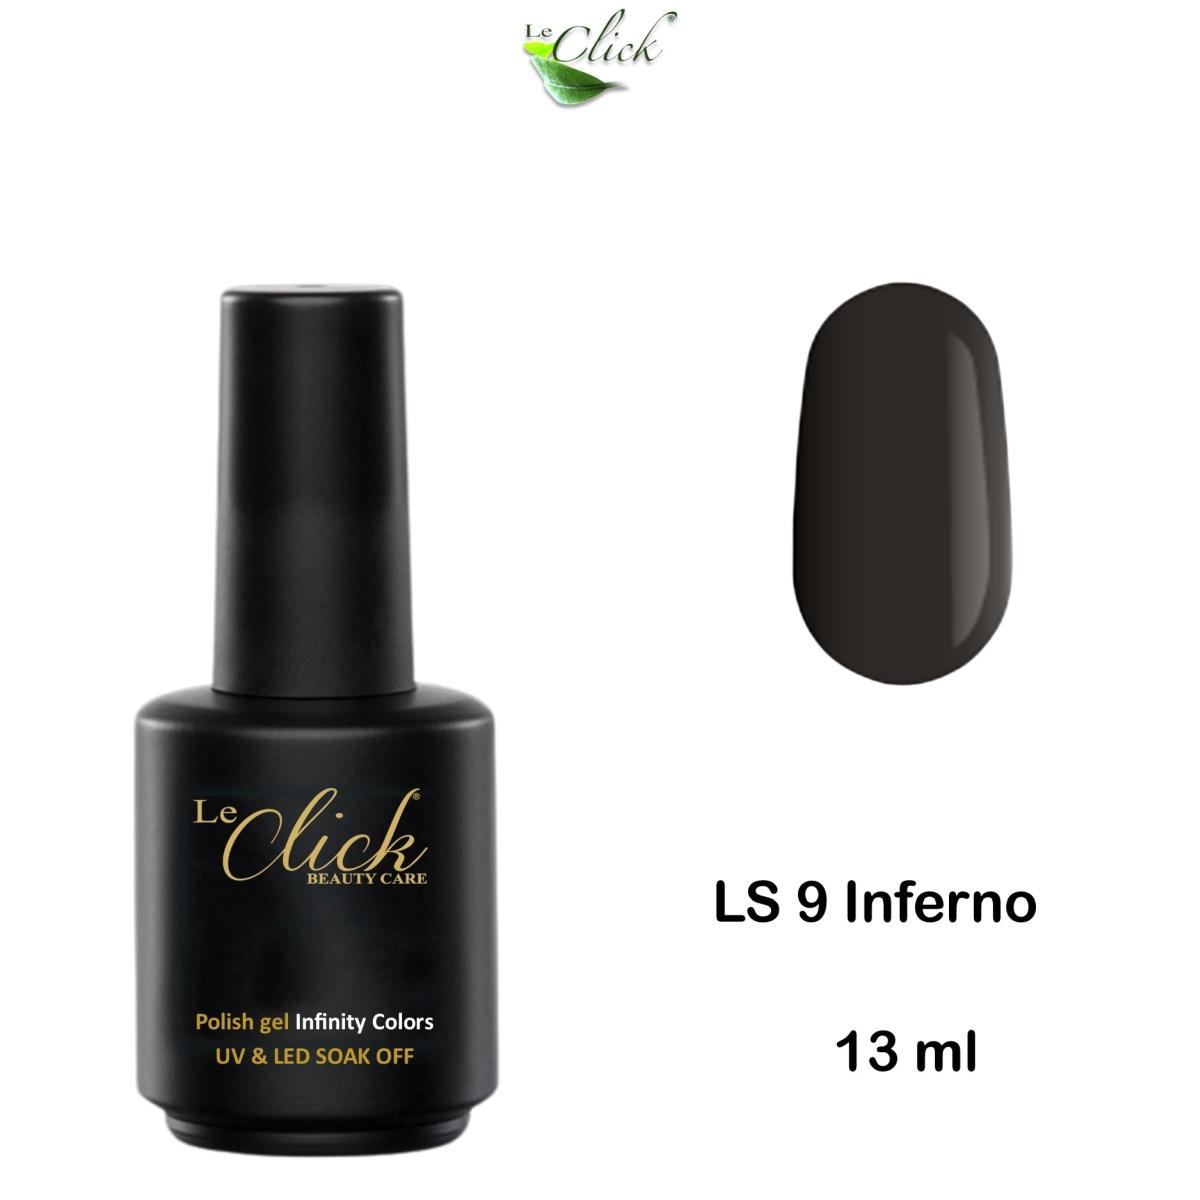 Le Click Polish Gel Infinity ( LS-9 ) Inferno 13 ml